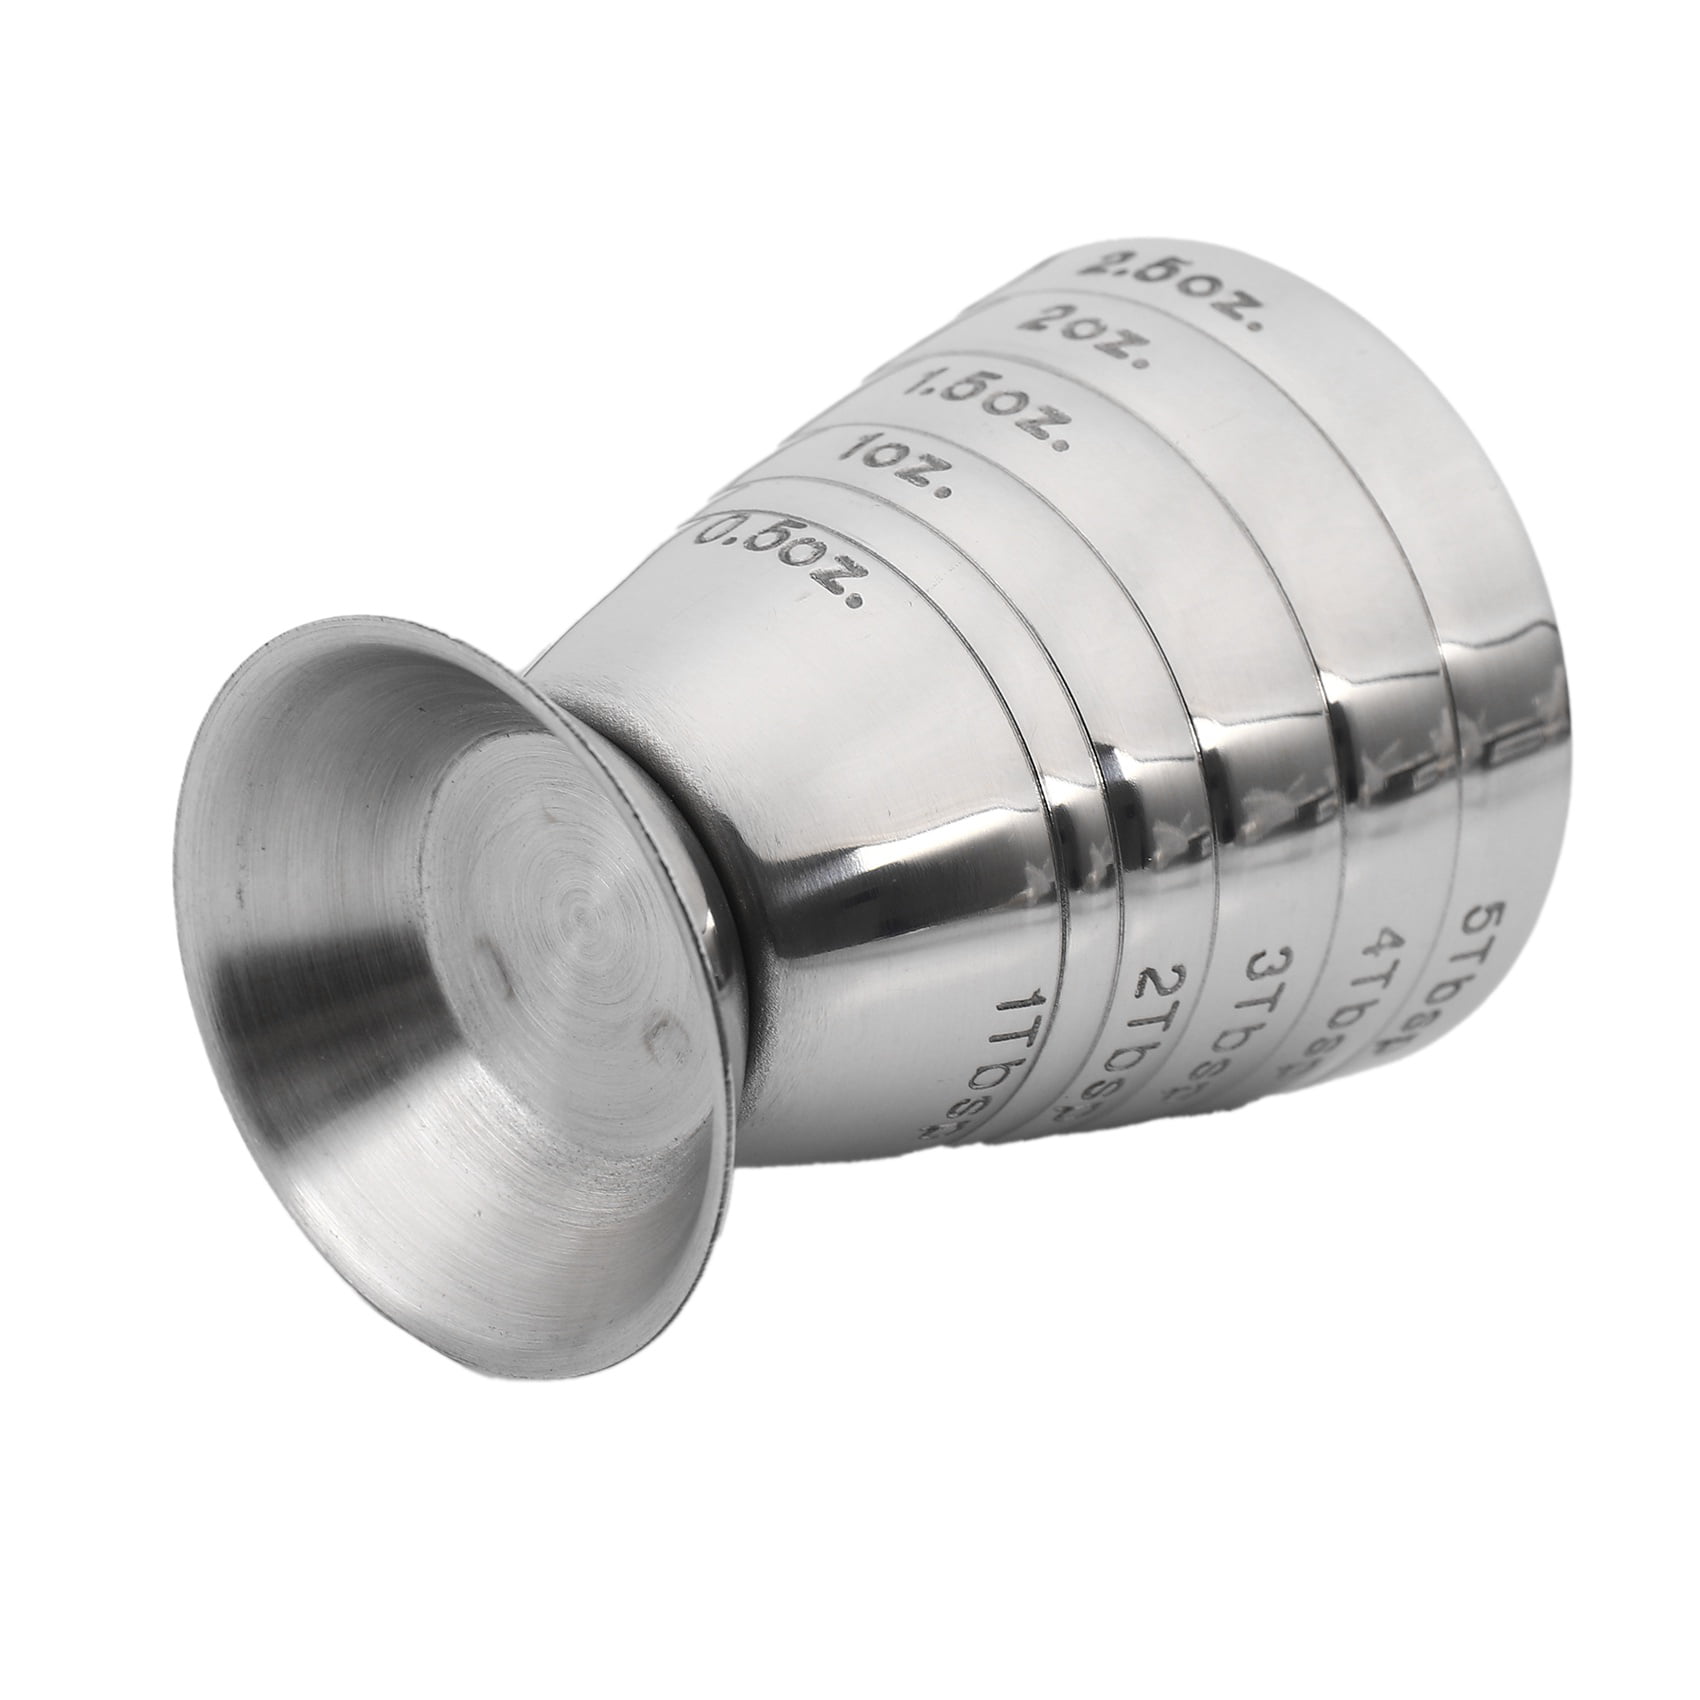 bar jigger bar measuring cup, jigger stainless steel matt filling capacity  20 ml, 40 ml calibration marks 20 ml